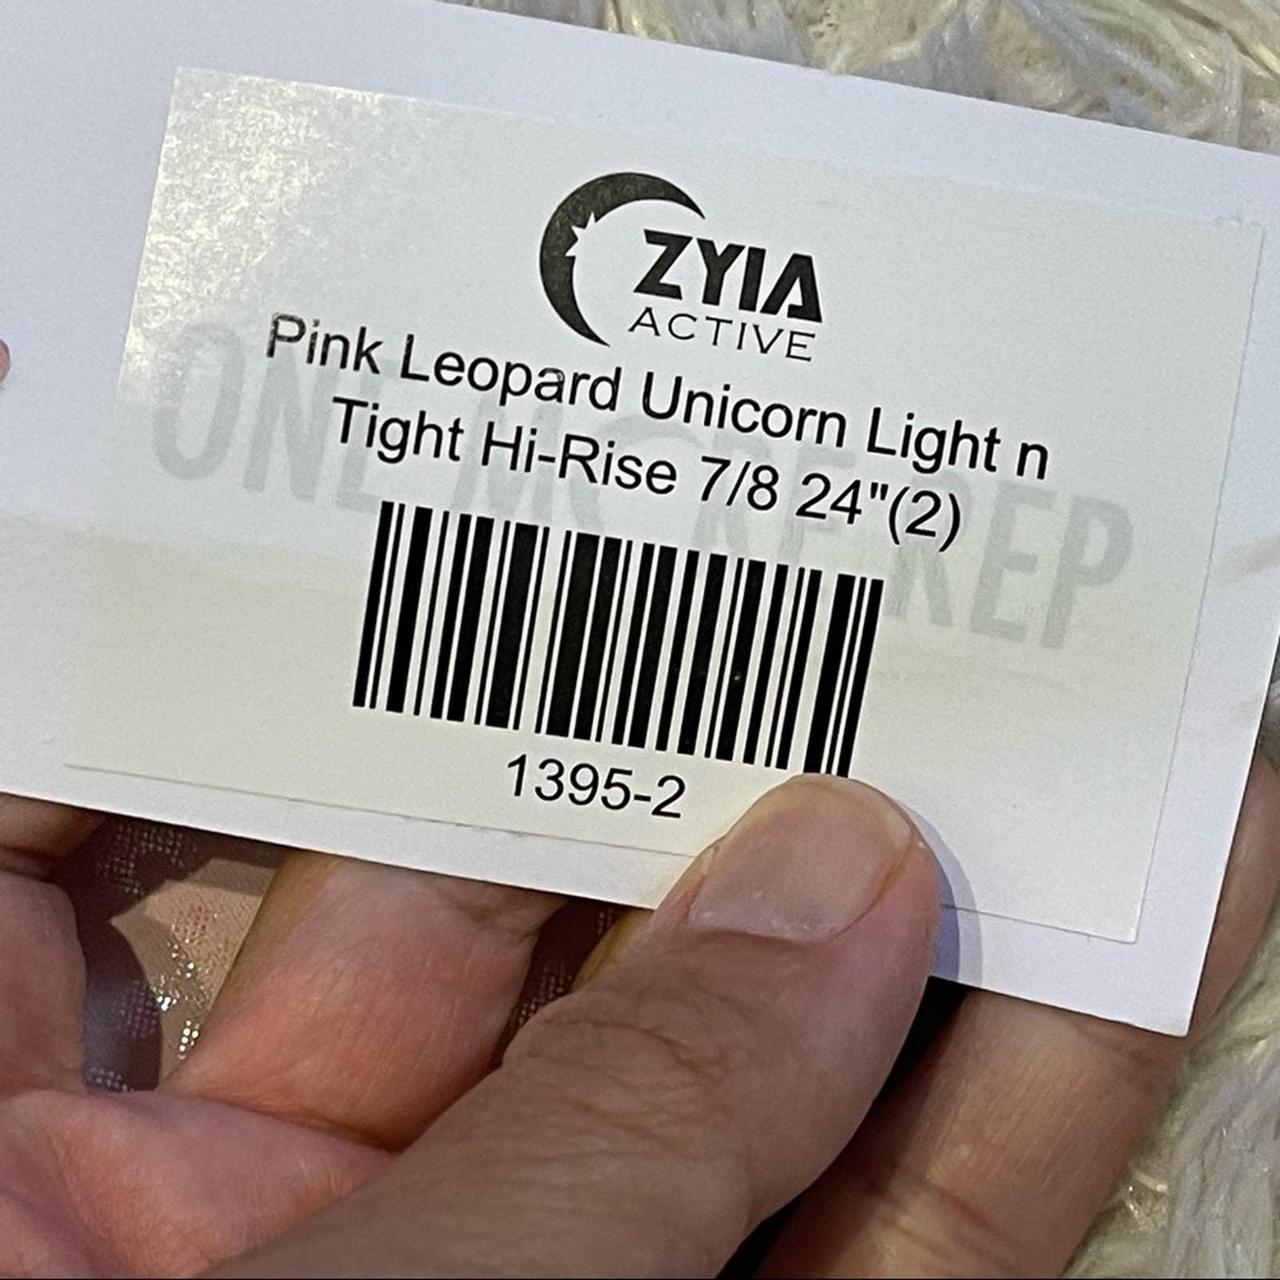 ZYIA pink leopard unicorn light n tight hi-rise 7/8 - Depop